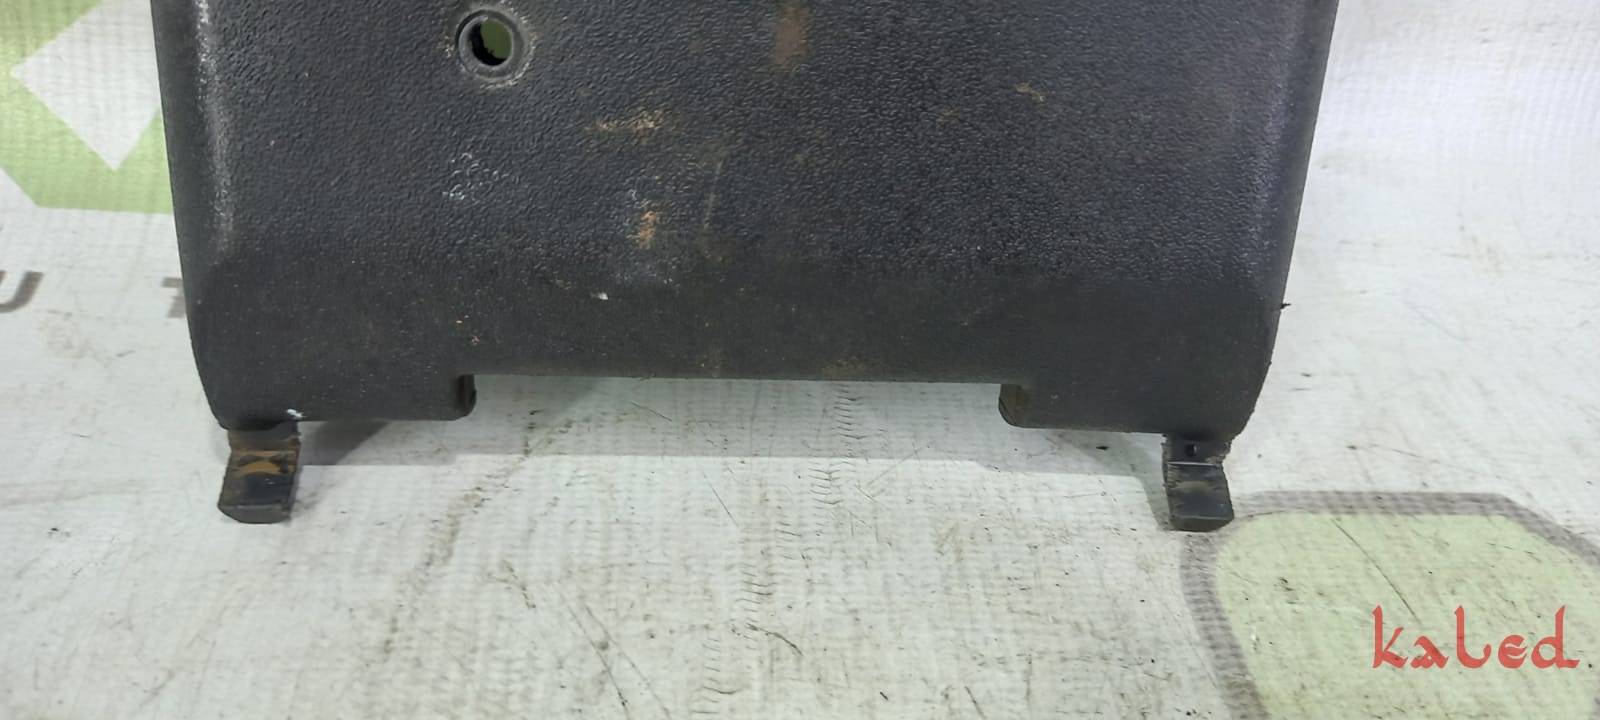 Capa tampa da bomba vácuo Audi 80  - Kaled Auto Parts